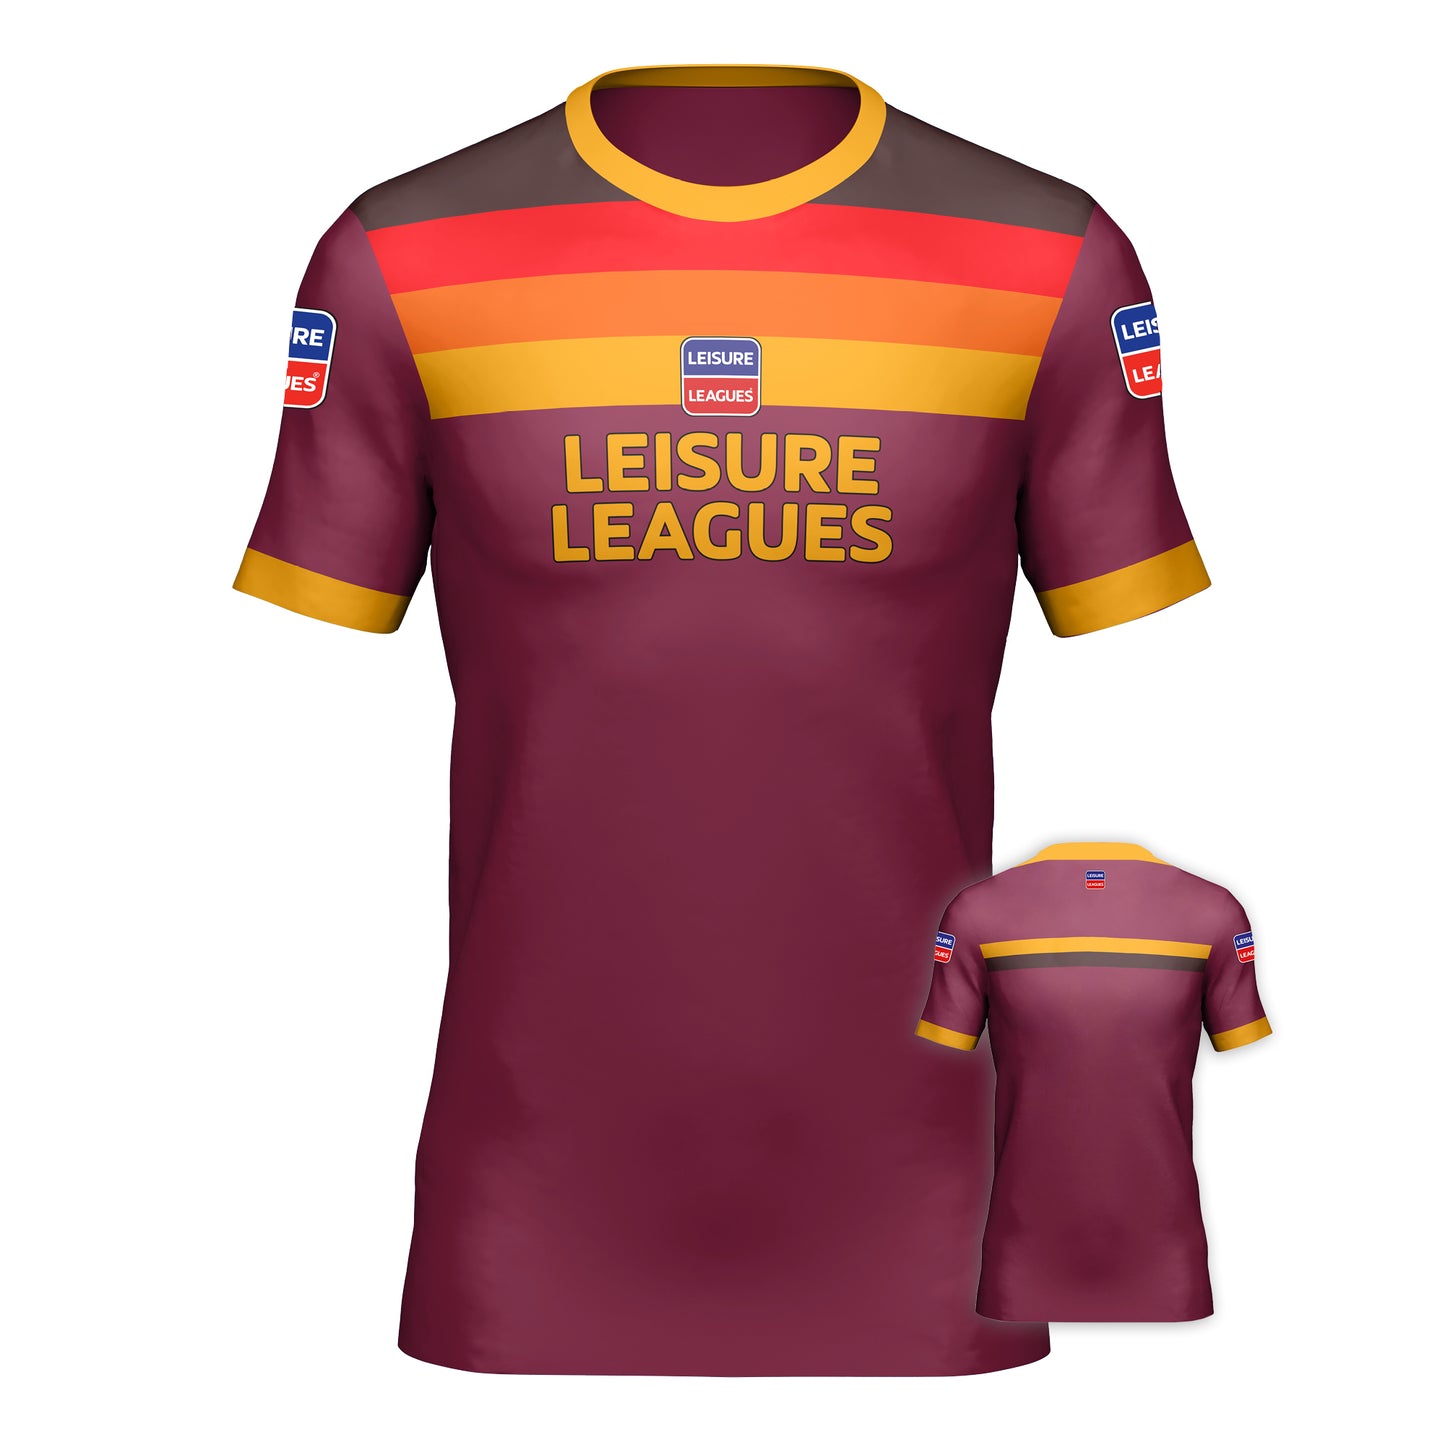 Football Shirt Leisure Leagues Kit Team Tshirt Roma Claret